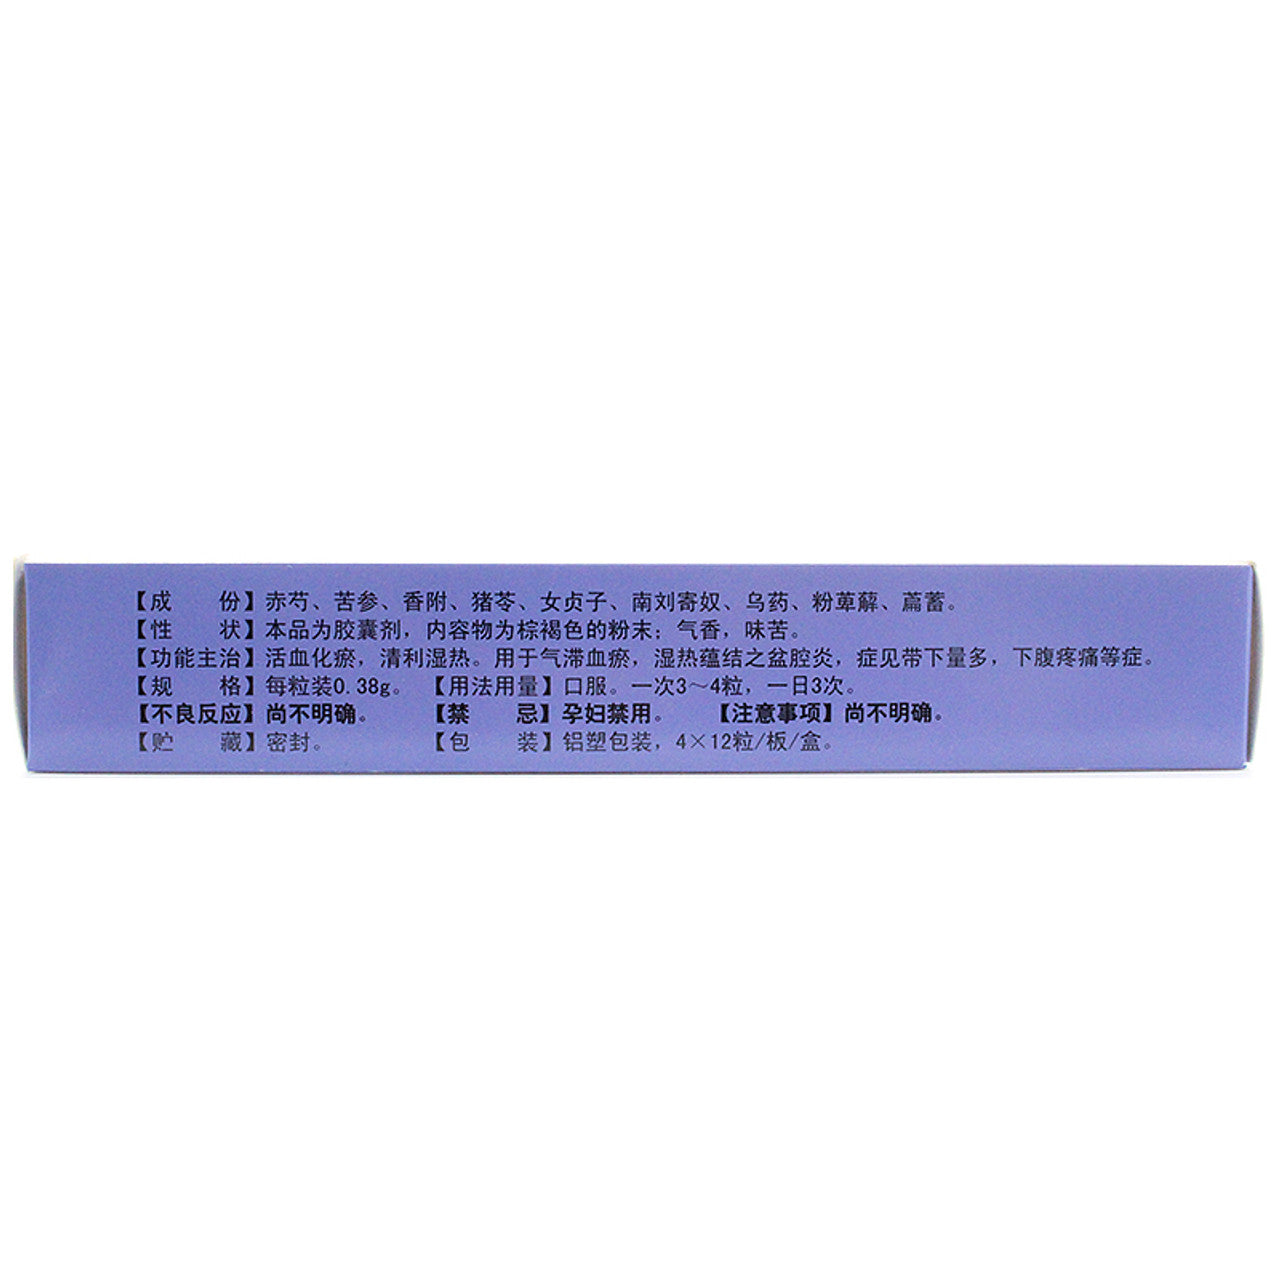 China Herb. Kunfukang Capsule or Kunfukang Jiaonang For Pelvic Inflammatory Disease. Kun Fu Kang Jiao Nang.